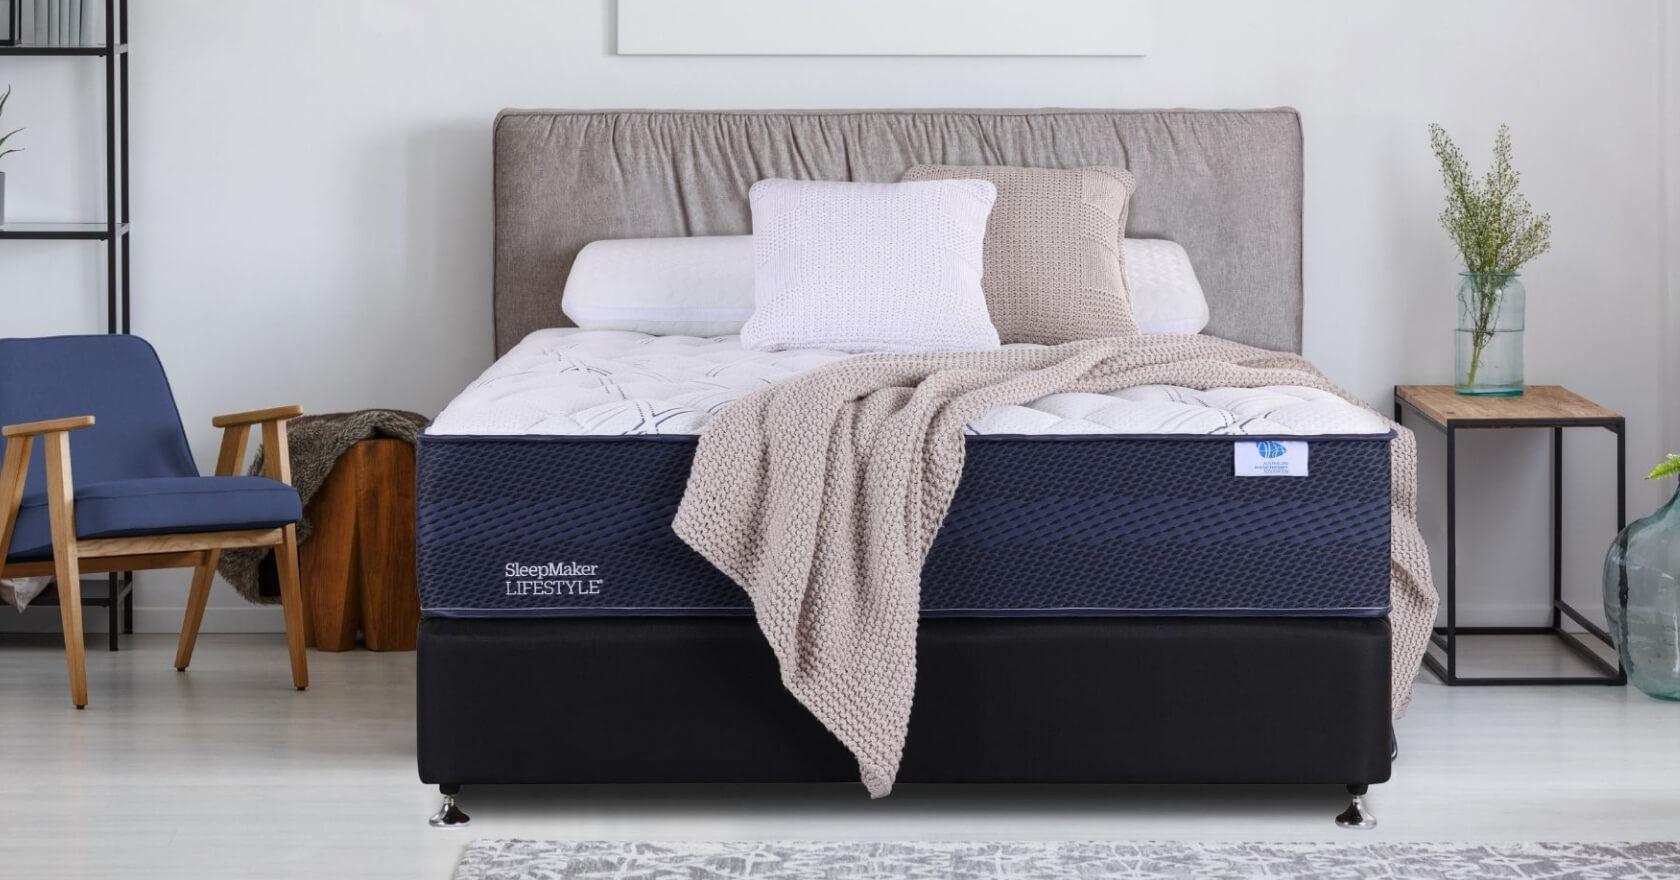 mattresses $1500 to $2000